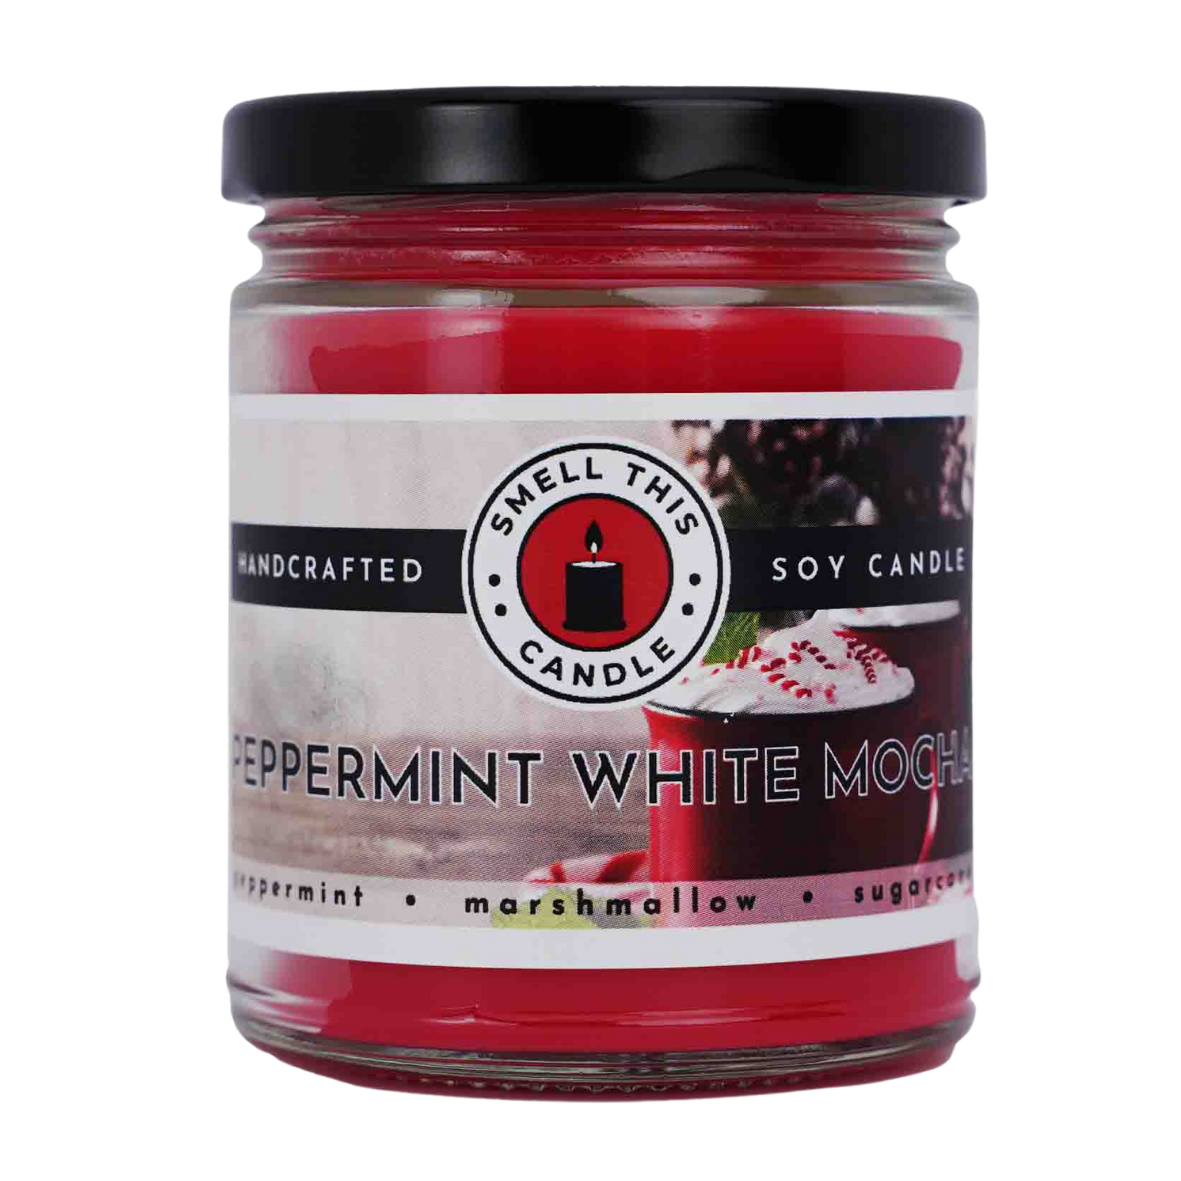 Peppermint White Mocha candle